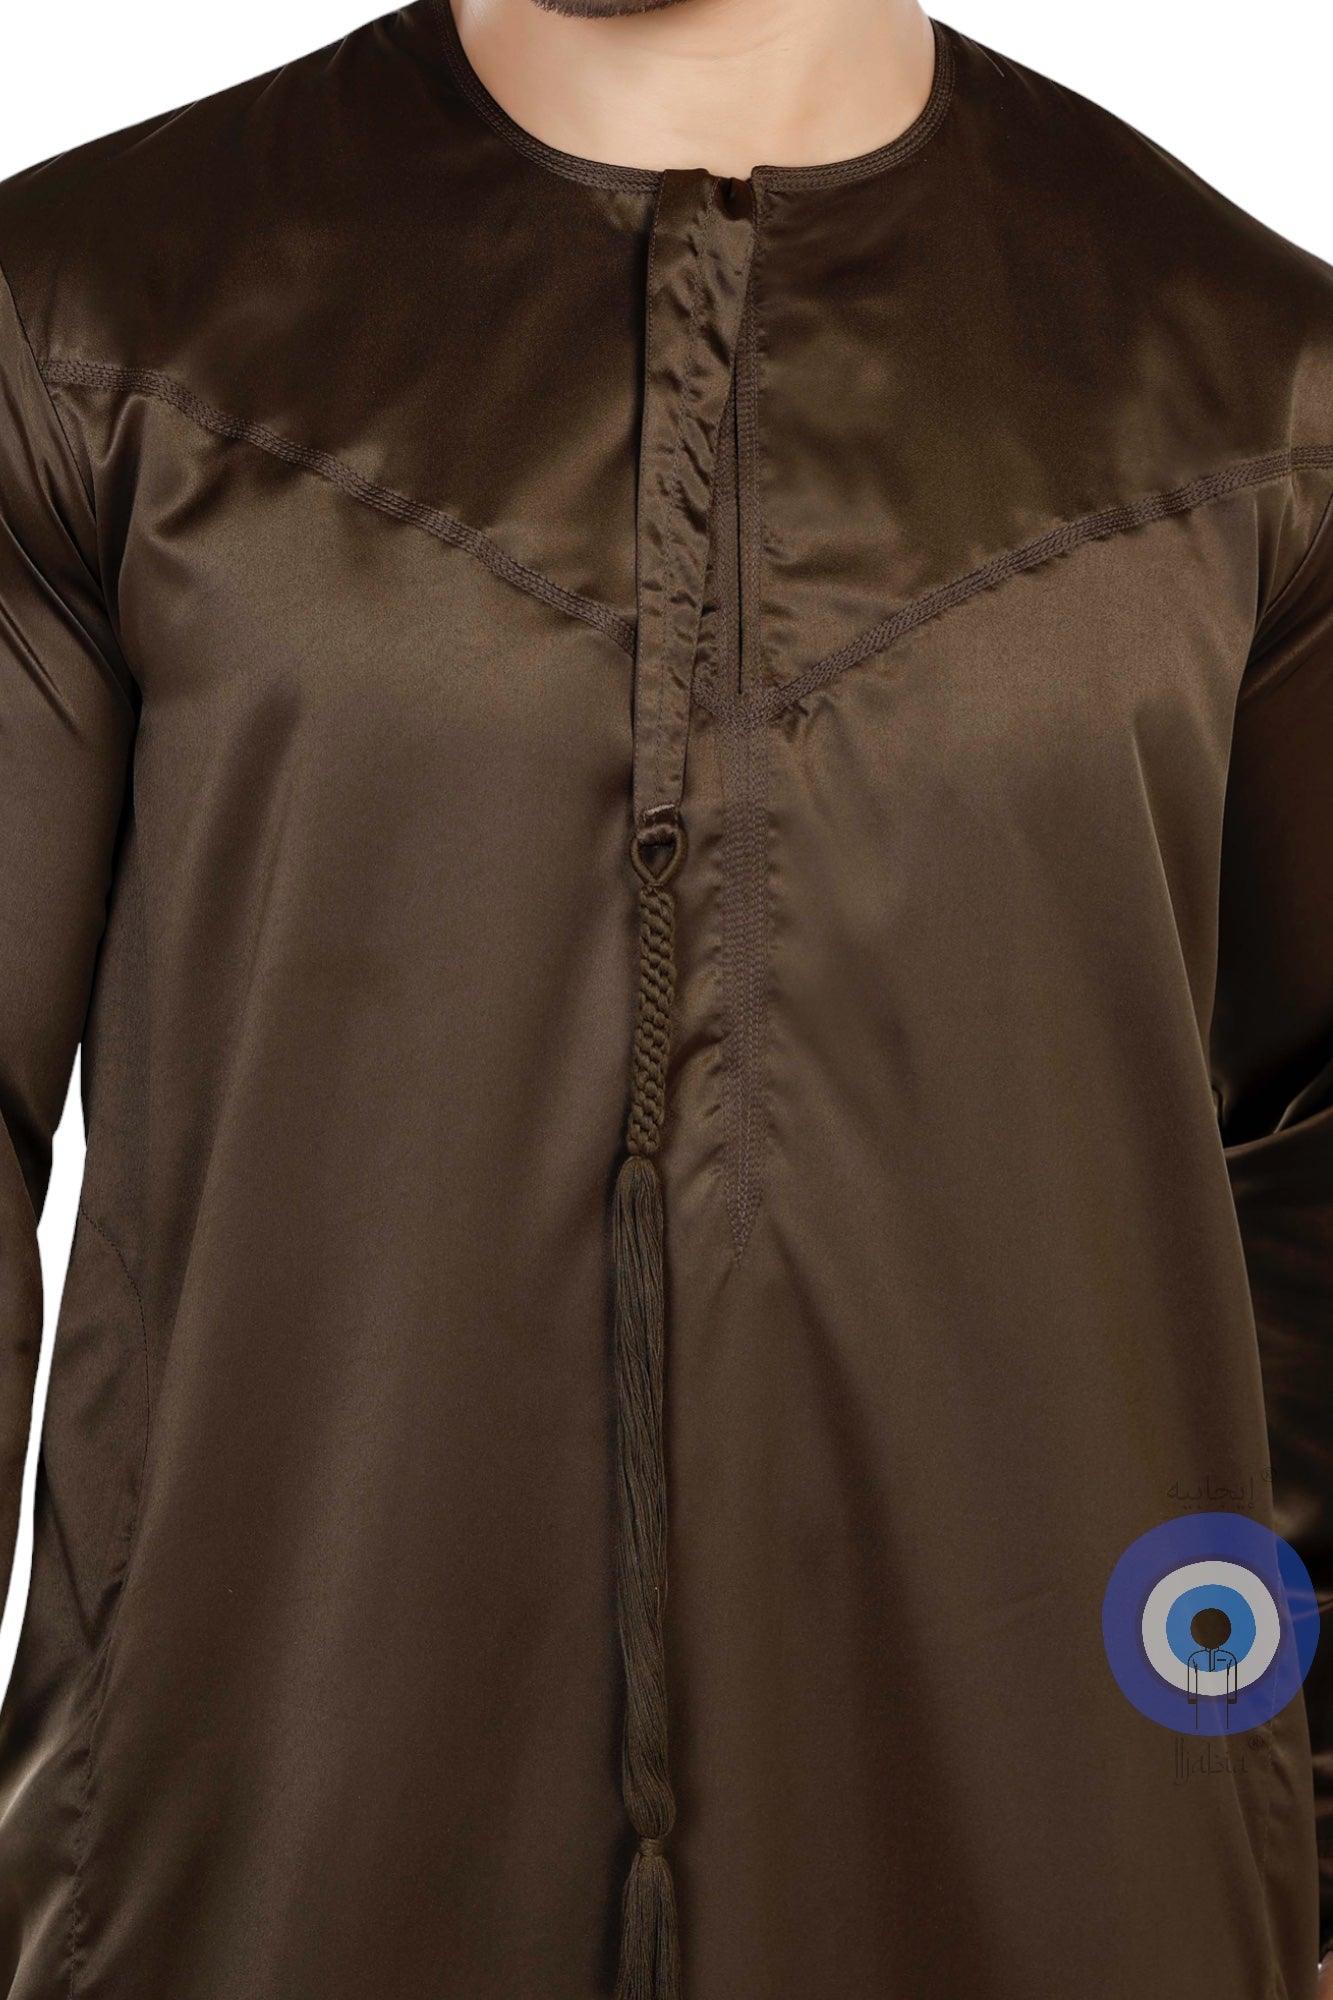 Indian Shiny Fabric Emirati Mens Omani Thobe - Full Sleeves - Mehndi Green - IIJABIA